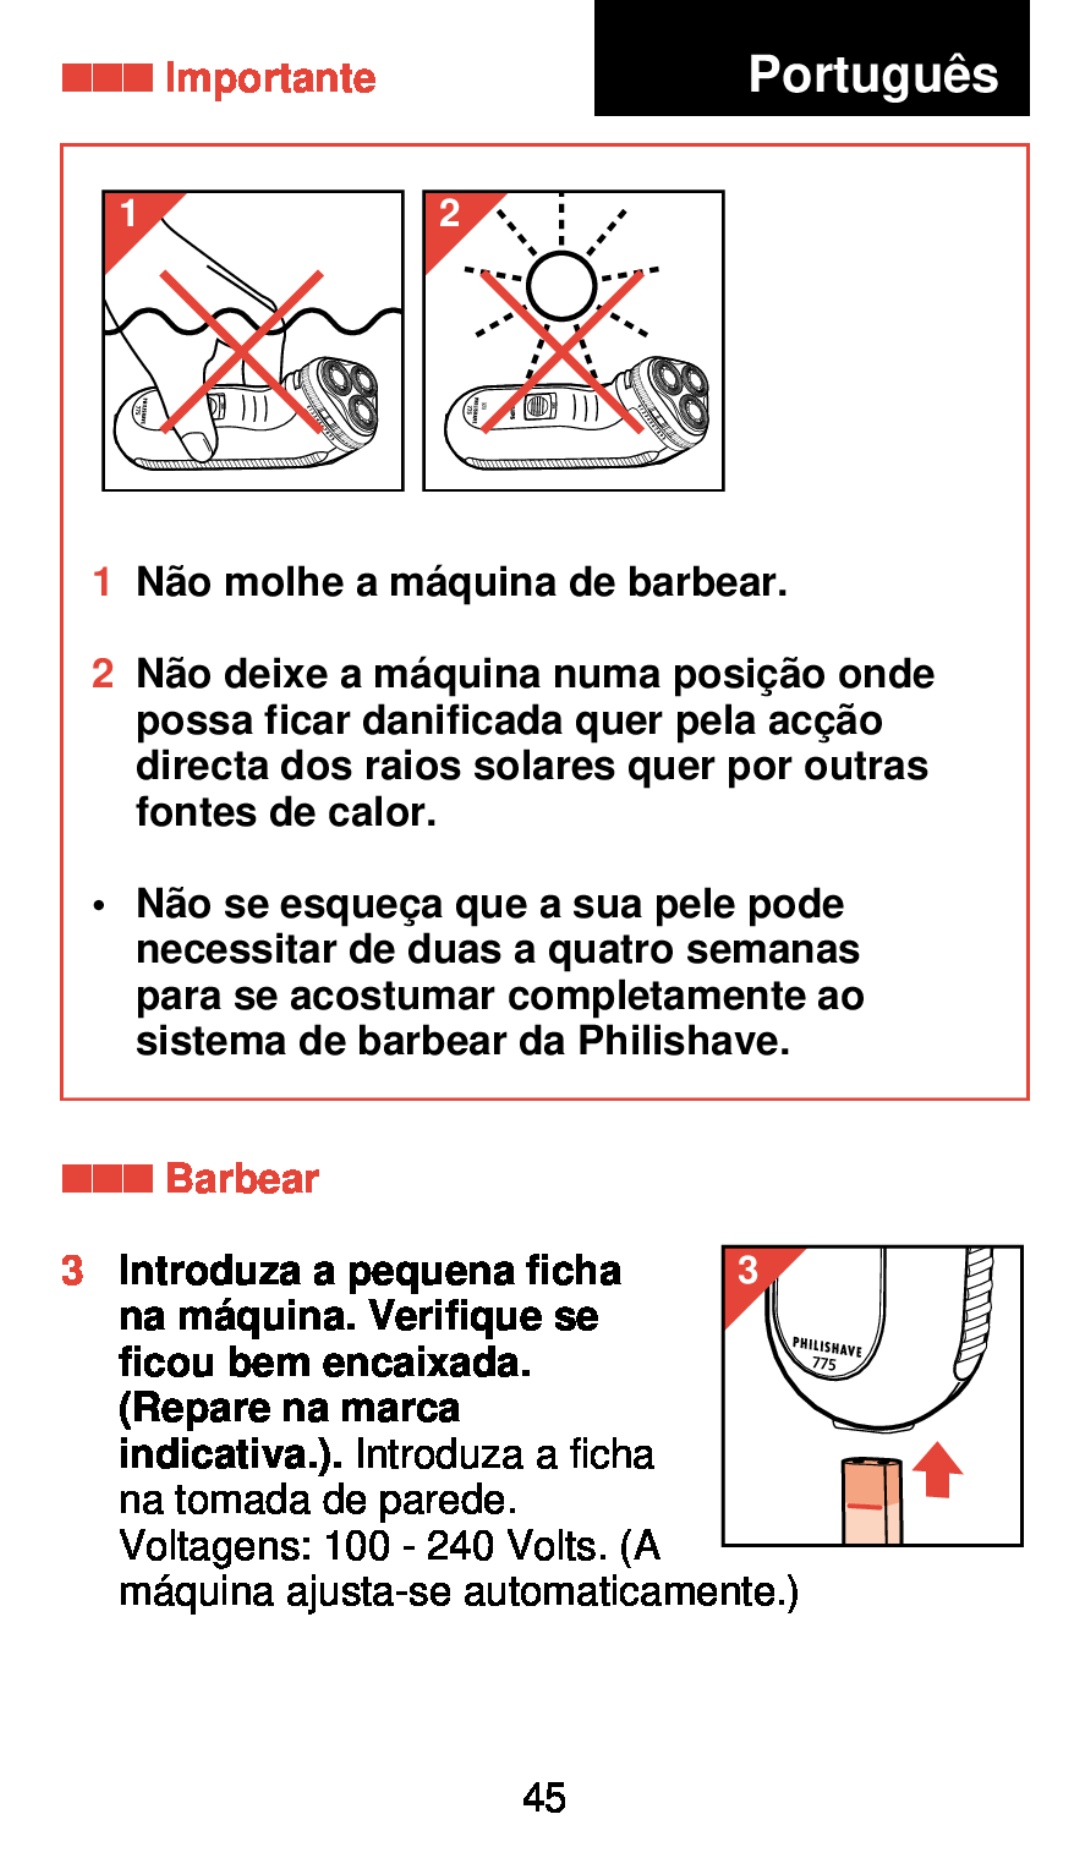 Philips 775 manual Portuguê s, Barbear, Importante 